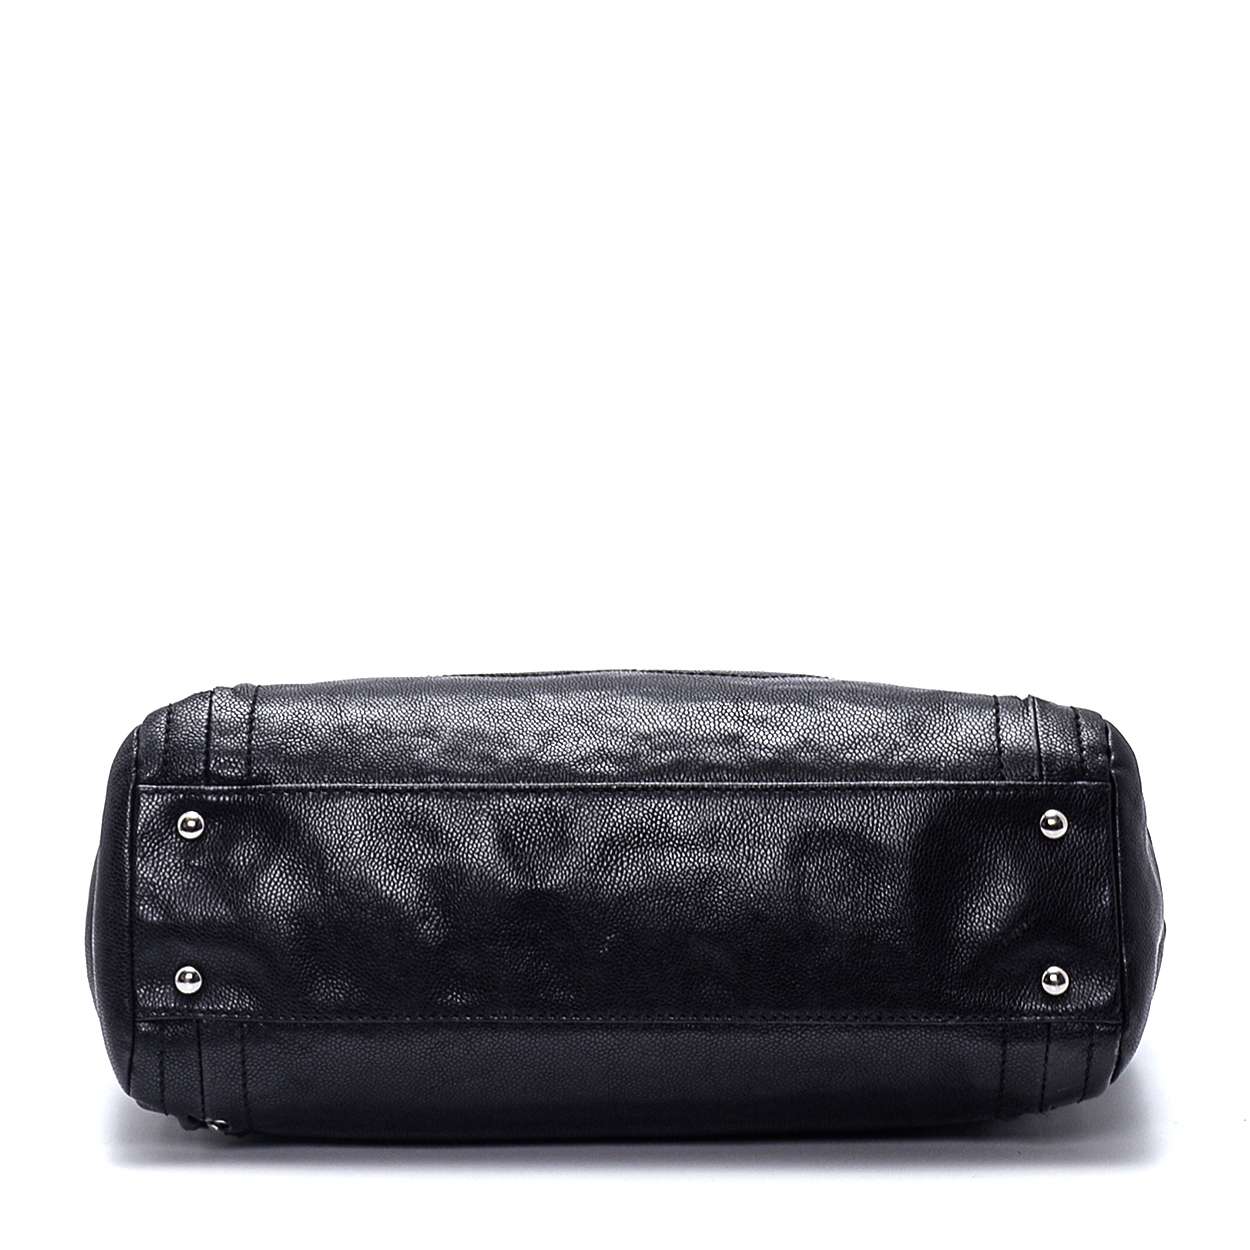 Chanel - Black Caviar Leather Metallic Chain Shoulder Bag